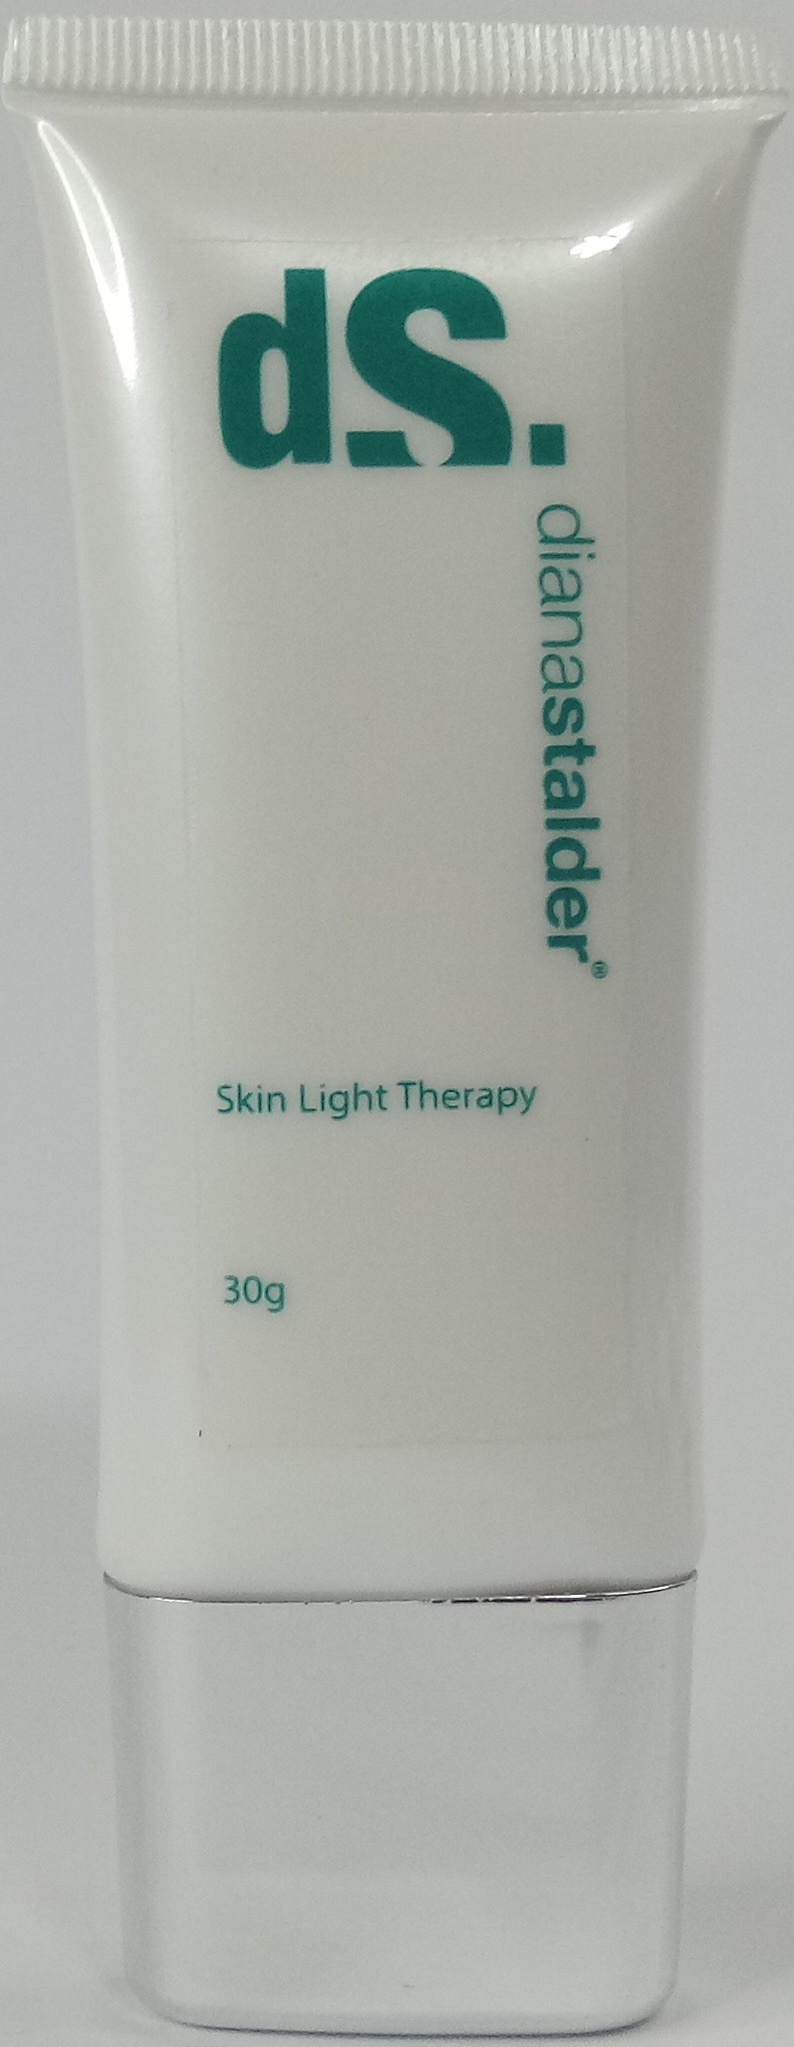 Diana Stalder Skin Light Therapy